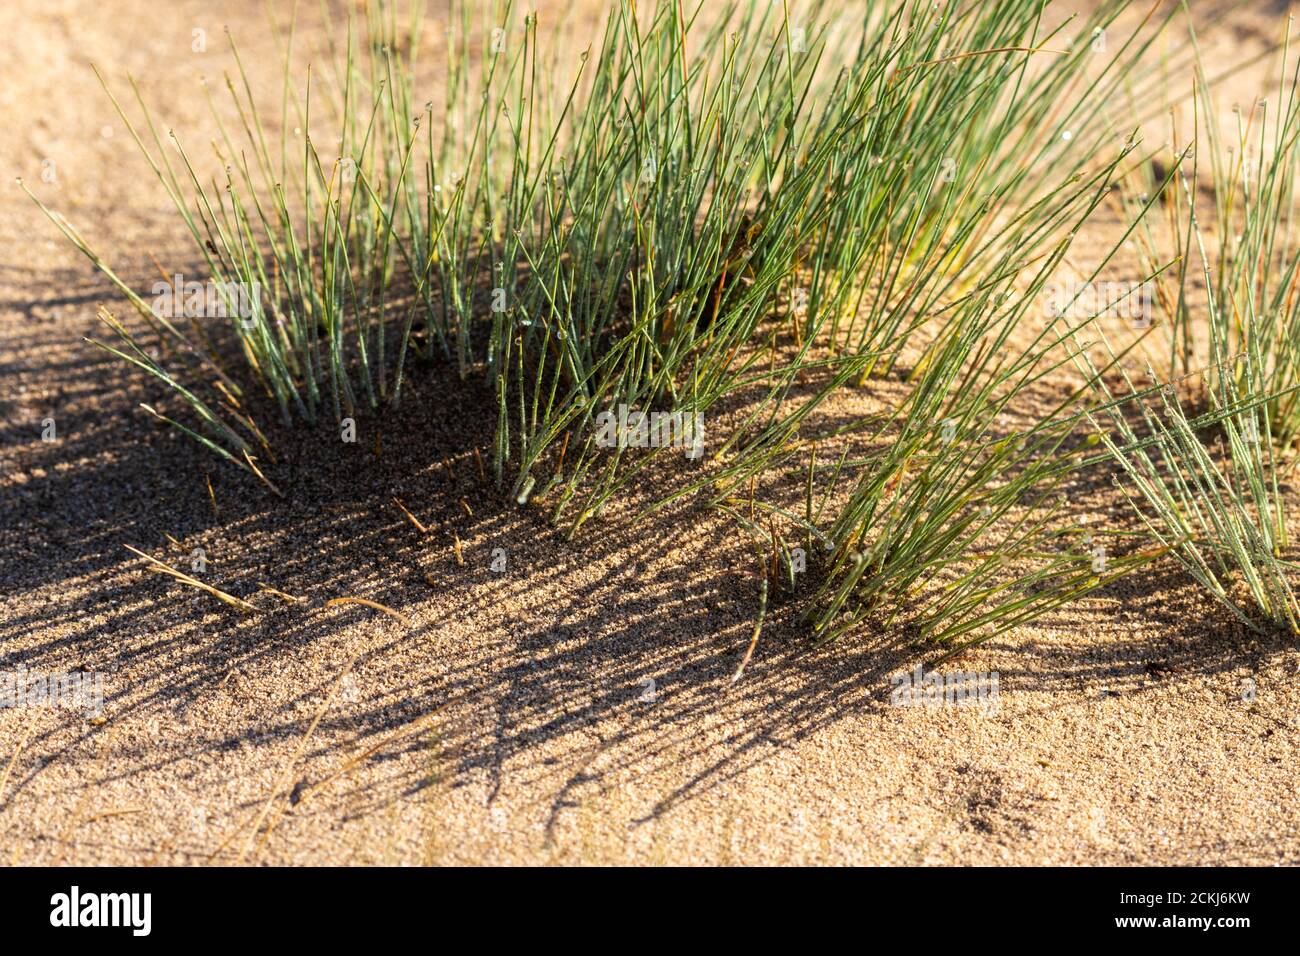 Corynephorus canescens, common name grey hair-grass or gray clubawn grass,, Special Reserve "Djurdjevac Sands" in Croatia Stock Photo